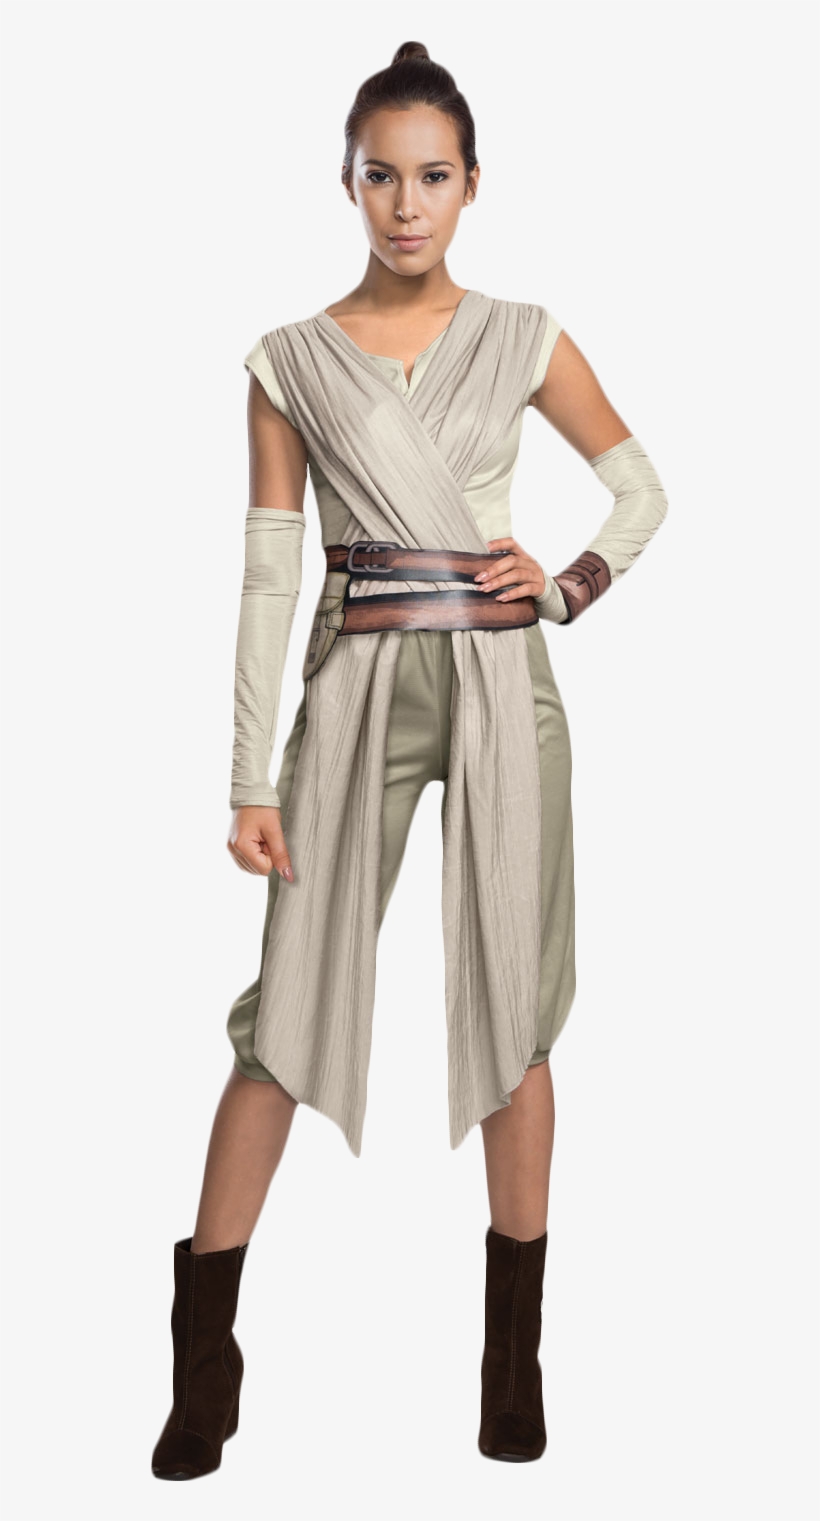 Star Wars Rey Costumes Available At Jedirobeamerica - Women Fancy Dress Ideas, transparent png #1756538